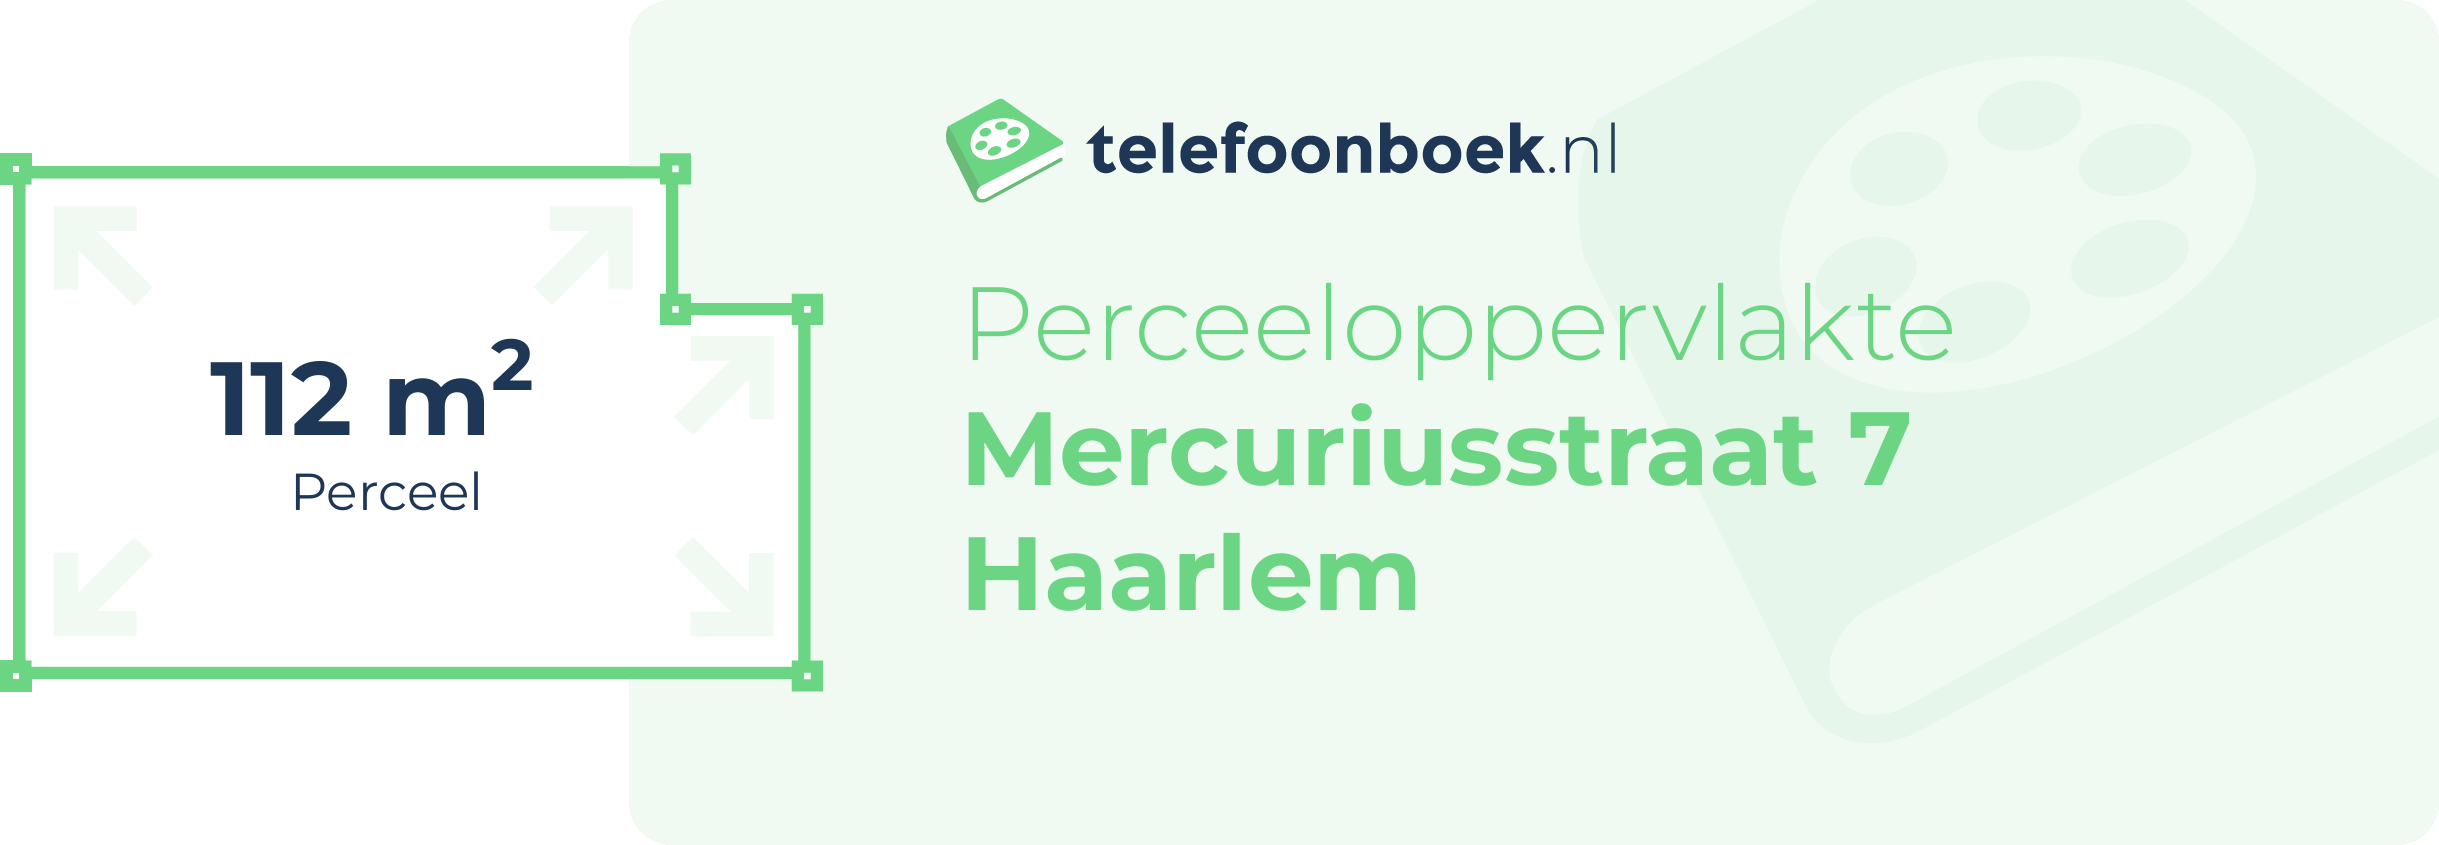 Perceeloppervlakte Mercuriusstraat 7 Haarlem